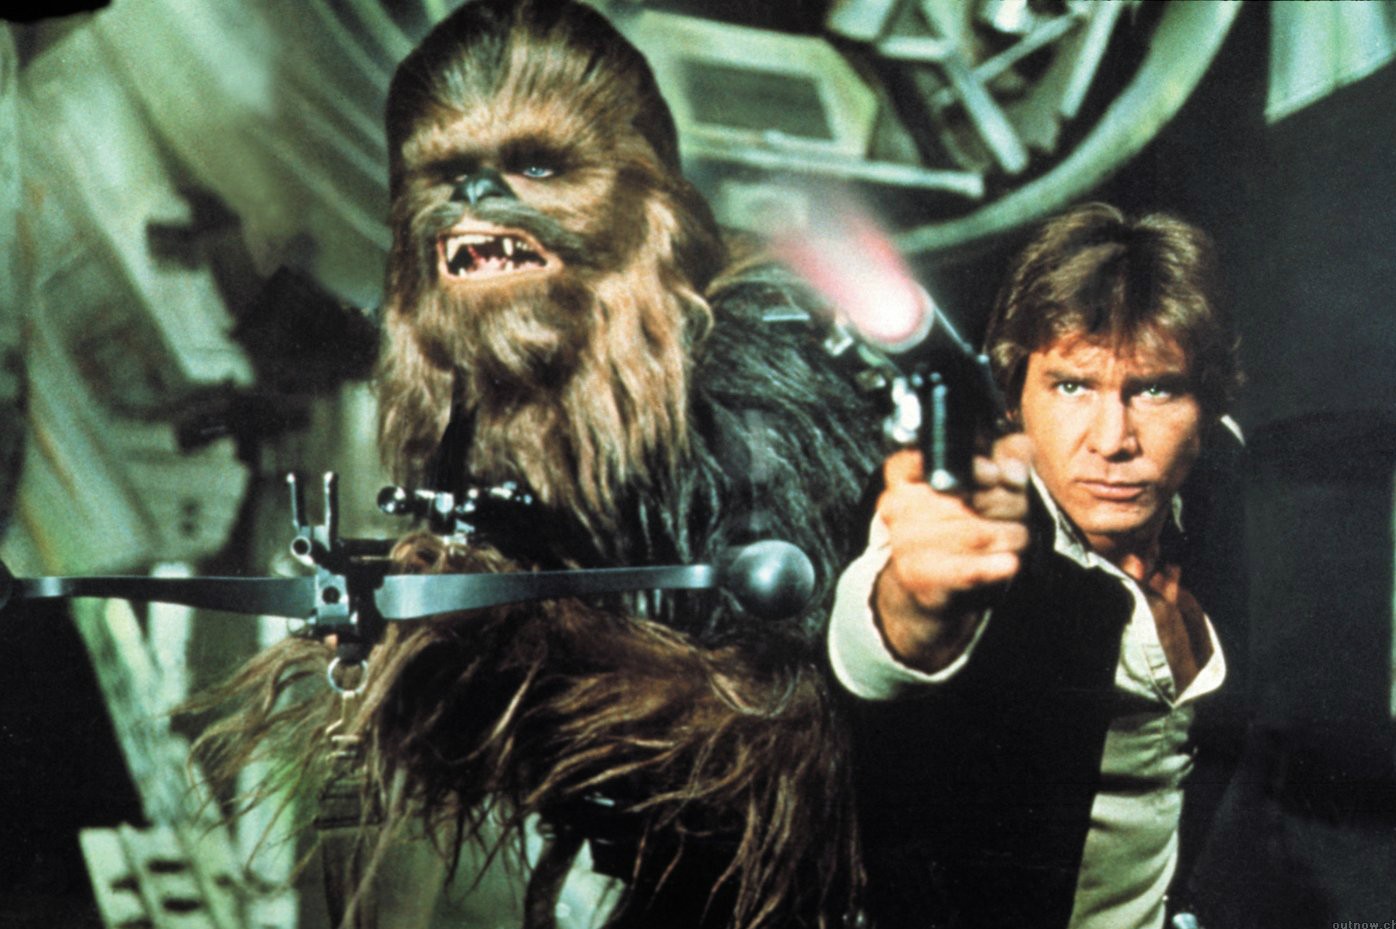 Morre Peter Mayhew, intérprete do Chewbacca em 'Star Wars